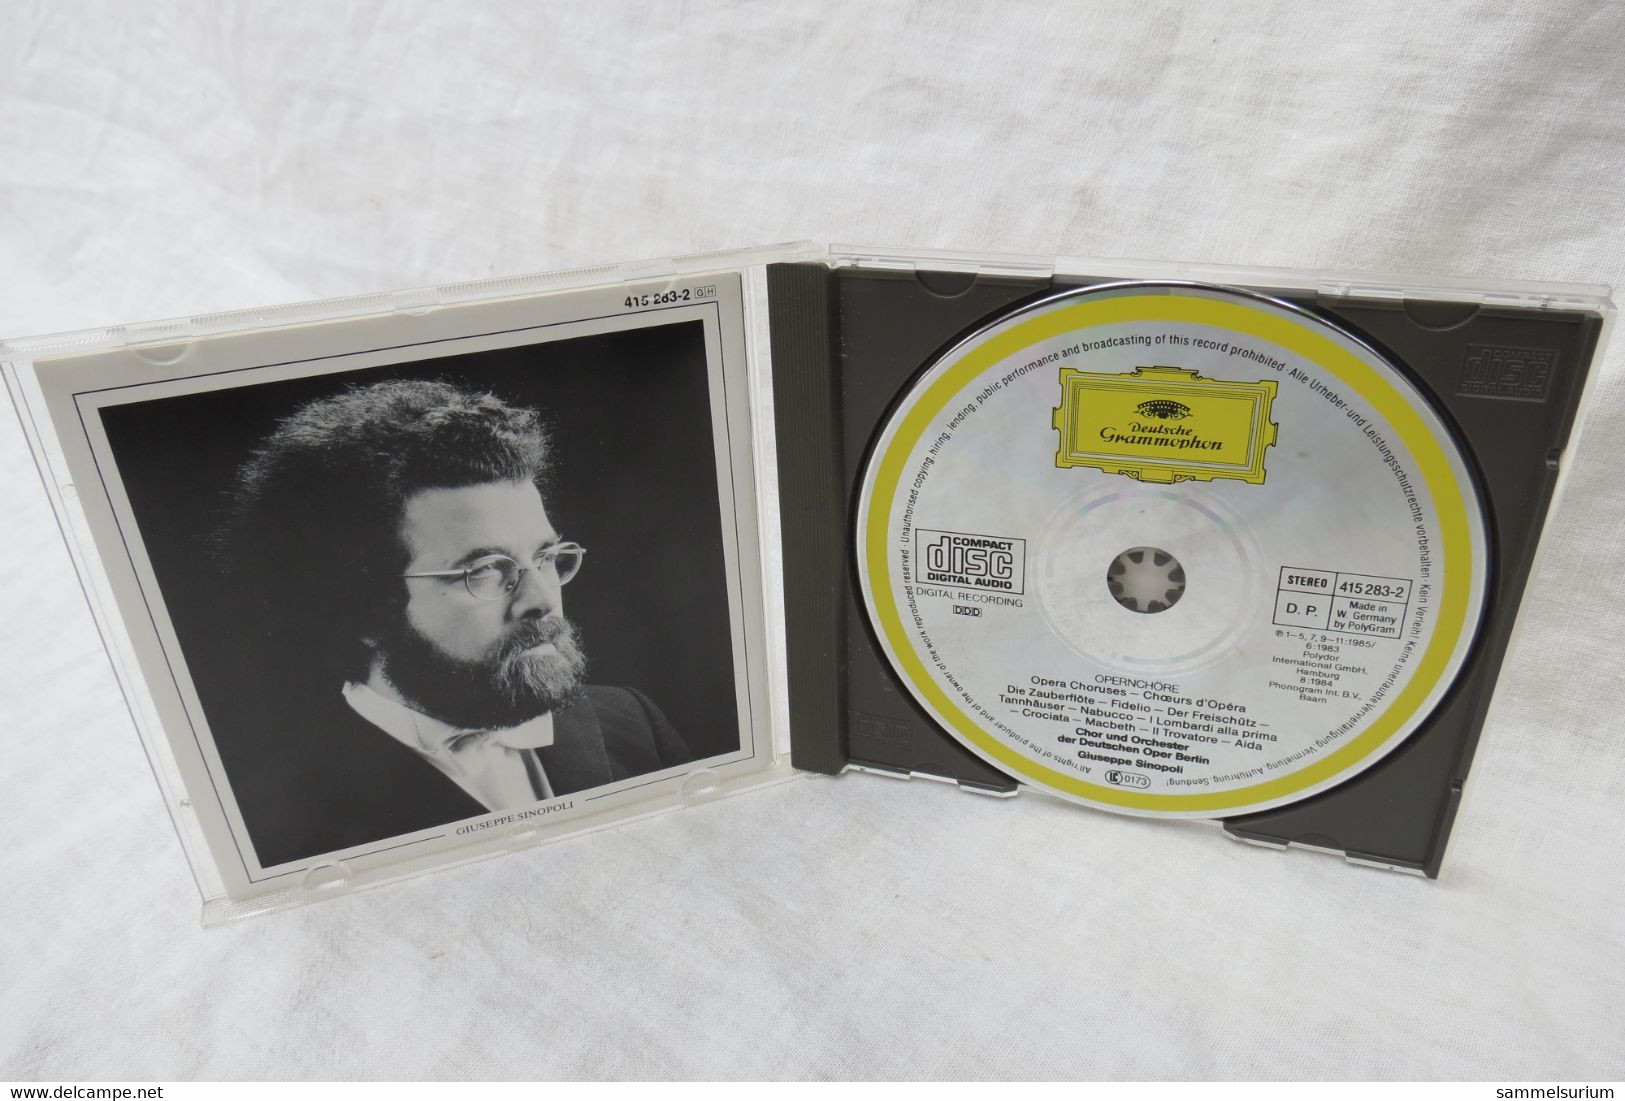 CD "Opern-Chöre" Mozart, Weber, Beethoven Giuseppe Sinopoli, Deutsche Grammophon - Opéra & Opérette